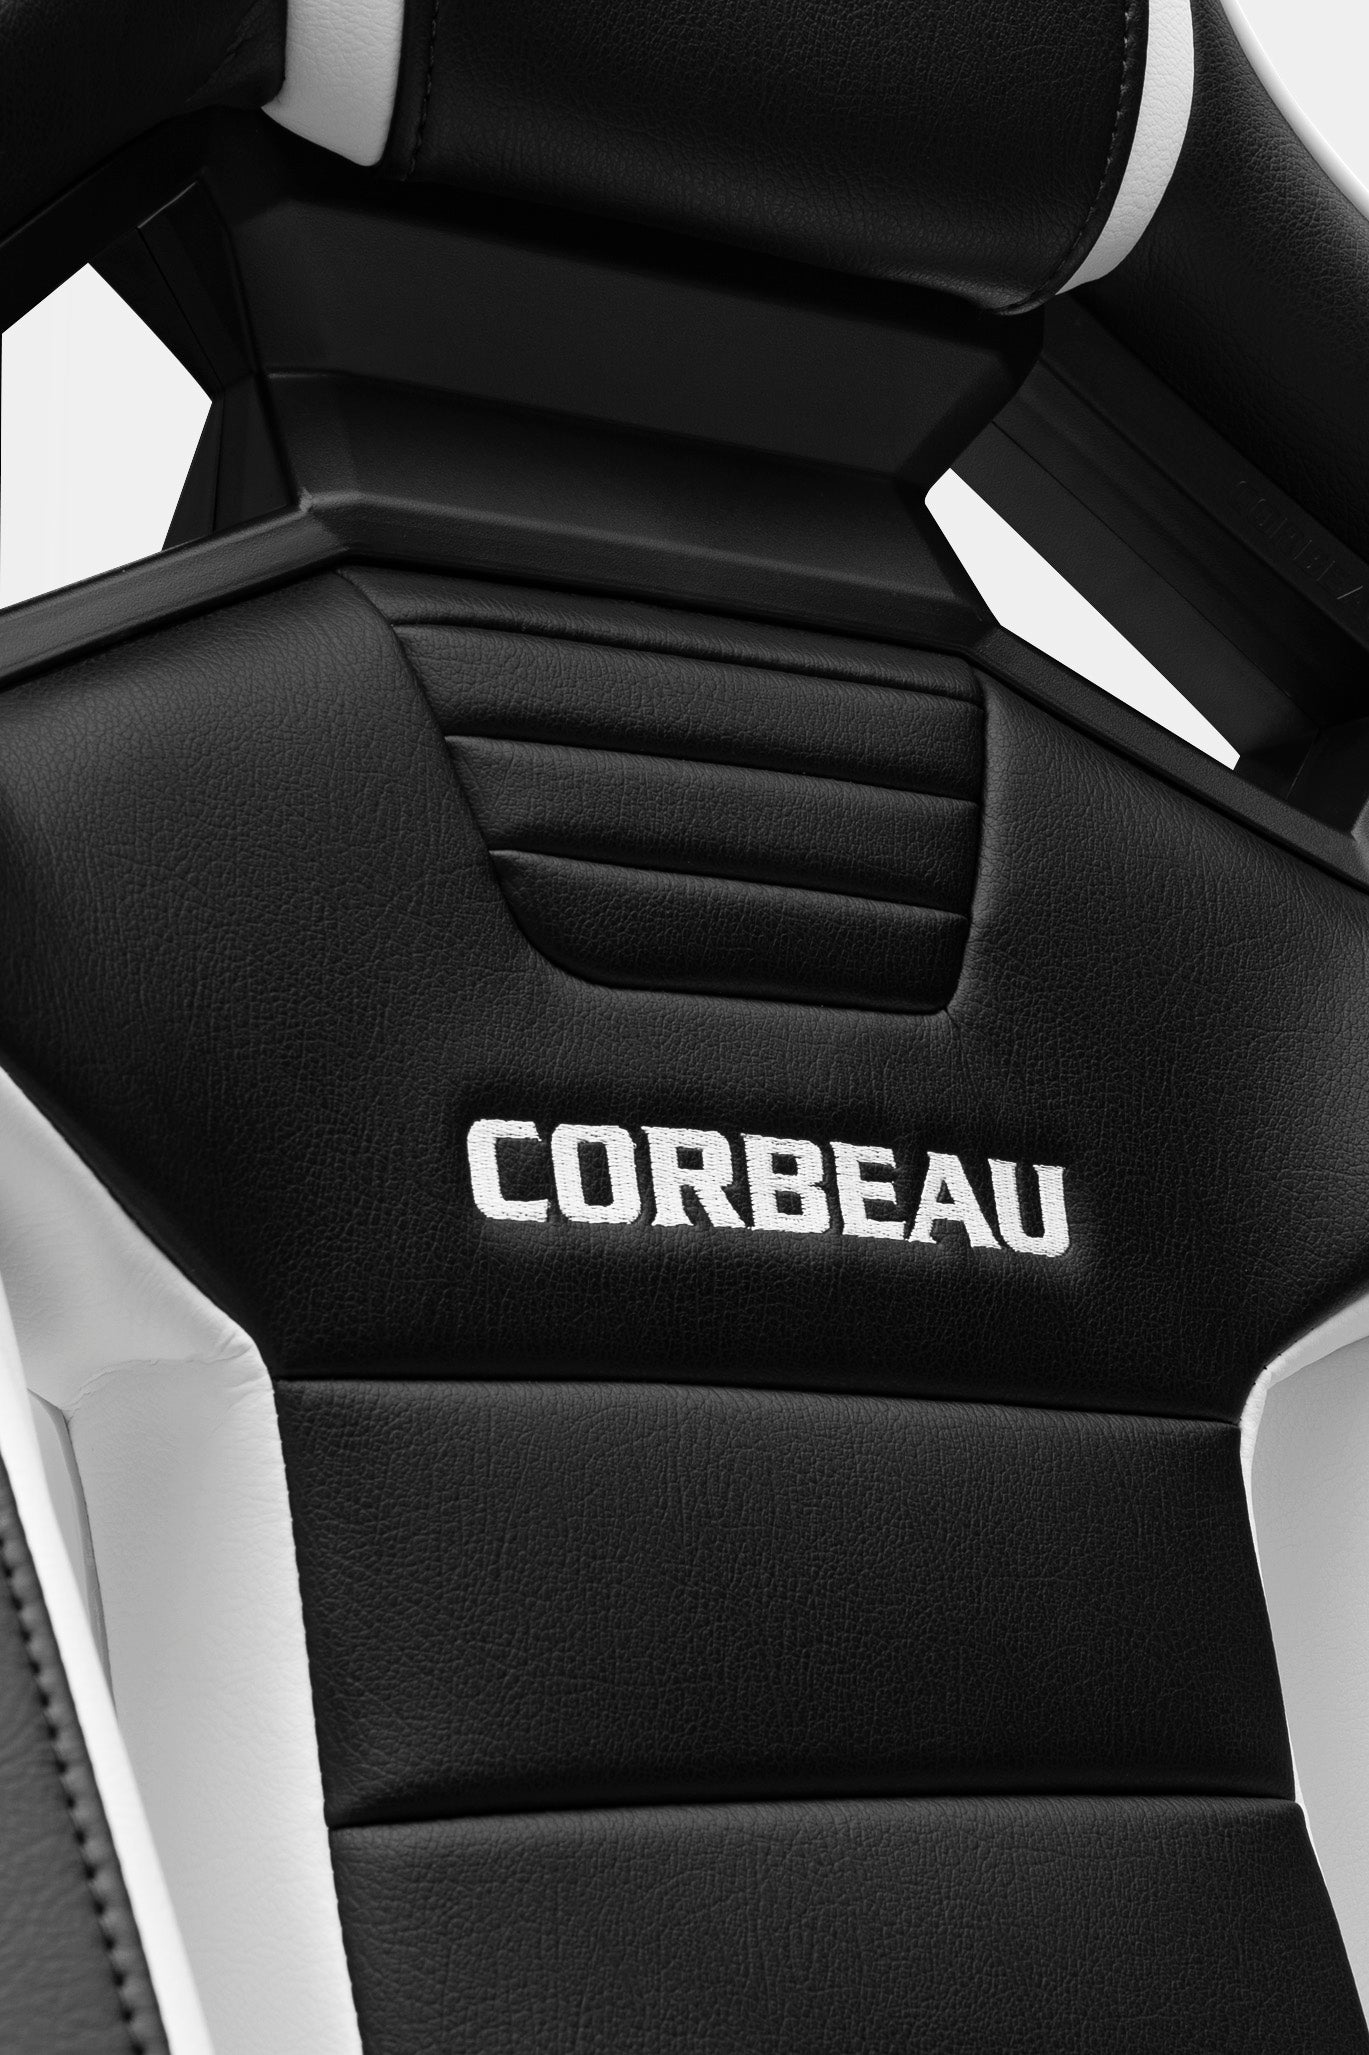 CORBEAU -  FXR RECLINING SEAT - PAIR